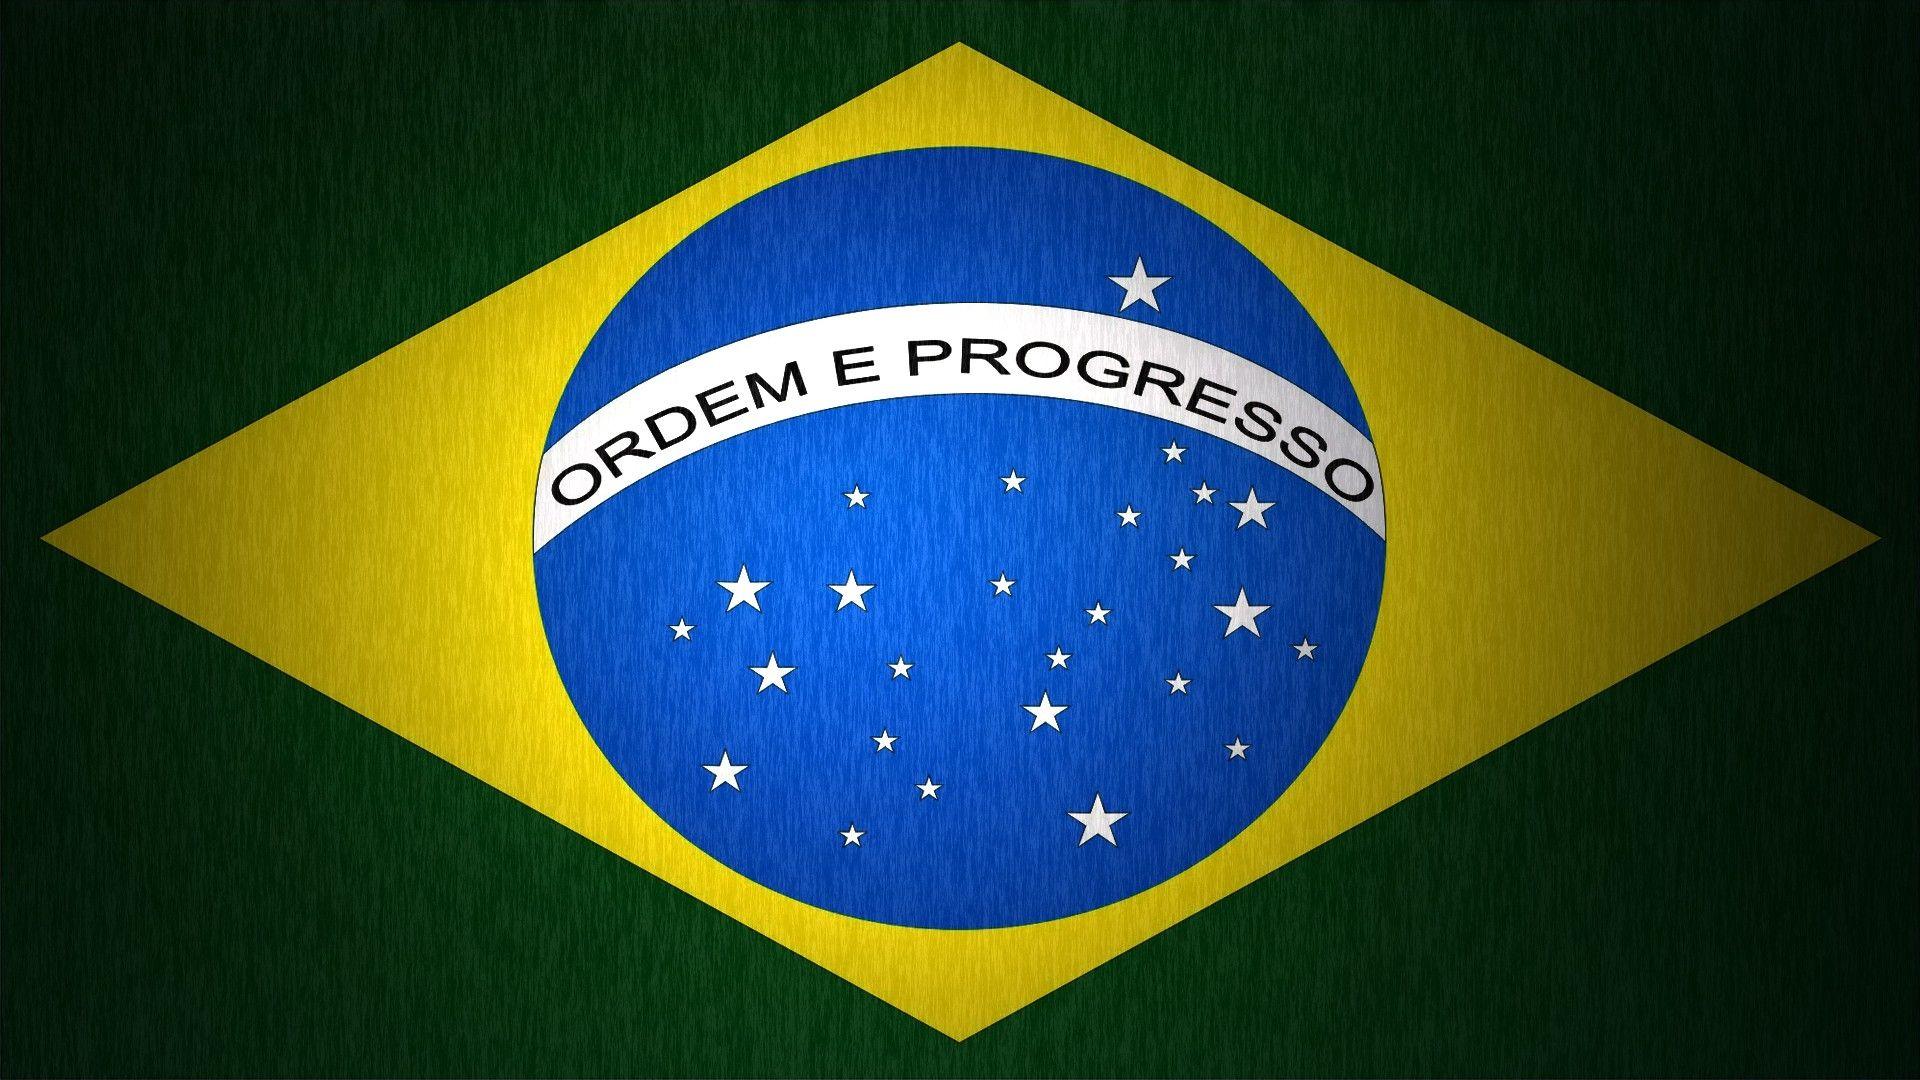 Brazil Flag Wallpaper Picture 50575 1920x1080 px